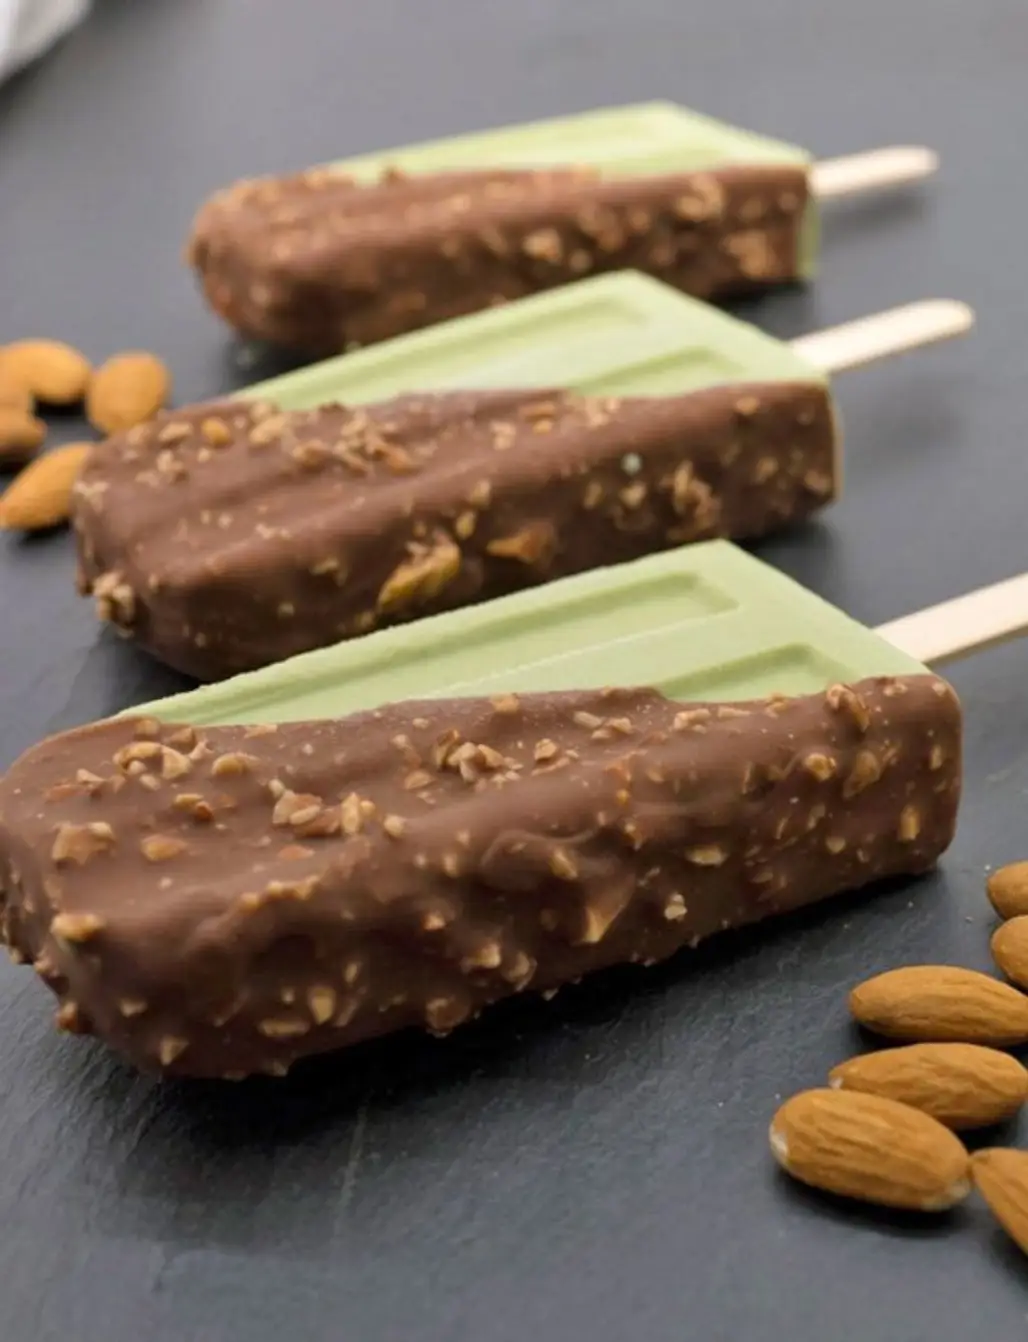 Matcha Ice Cream Bars with Magic Chocolate and Toasted Almond Shell